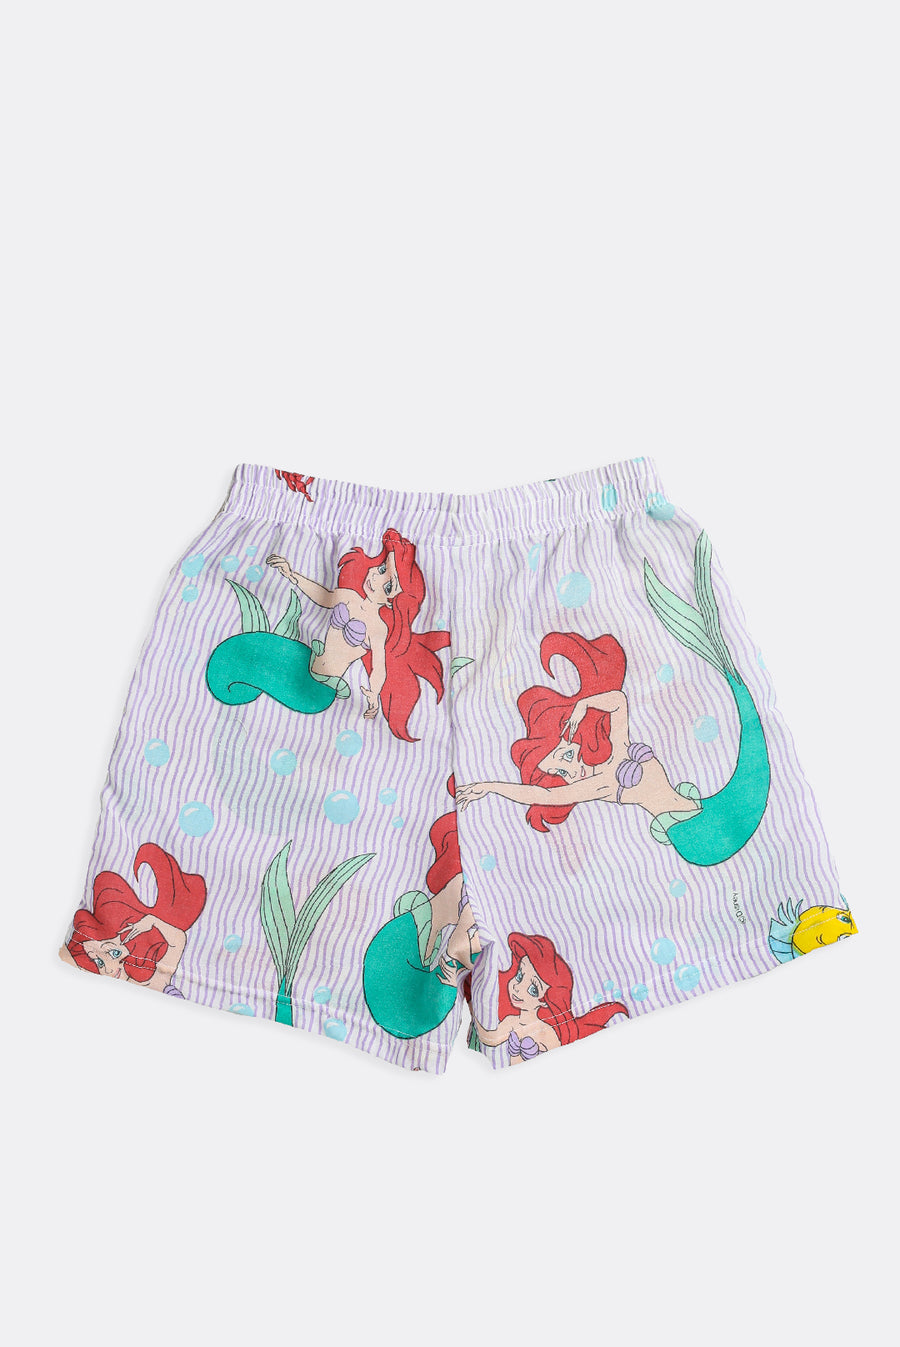 Unisex Rework The Little Mermaid Boxer Shorts - XS, M